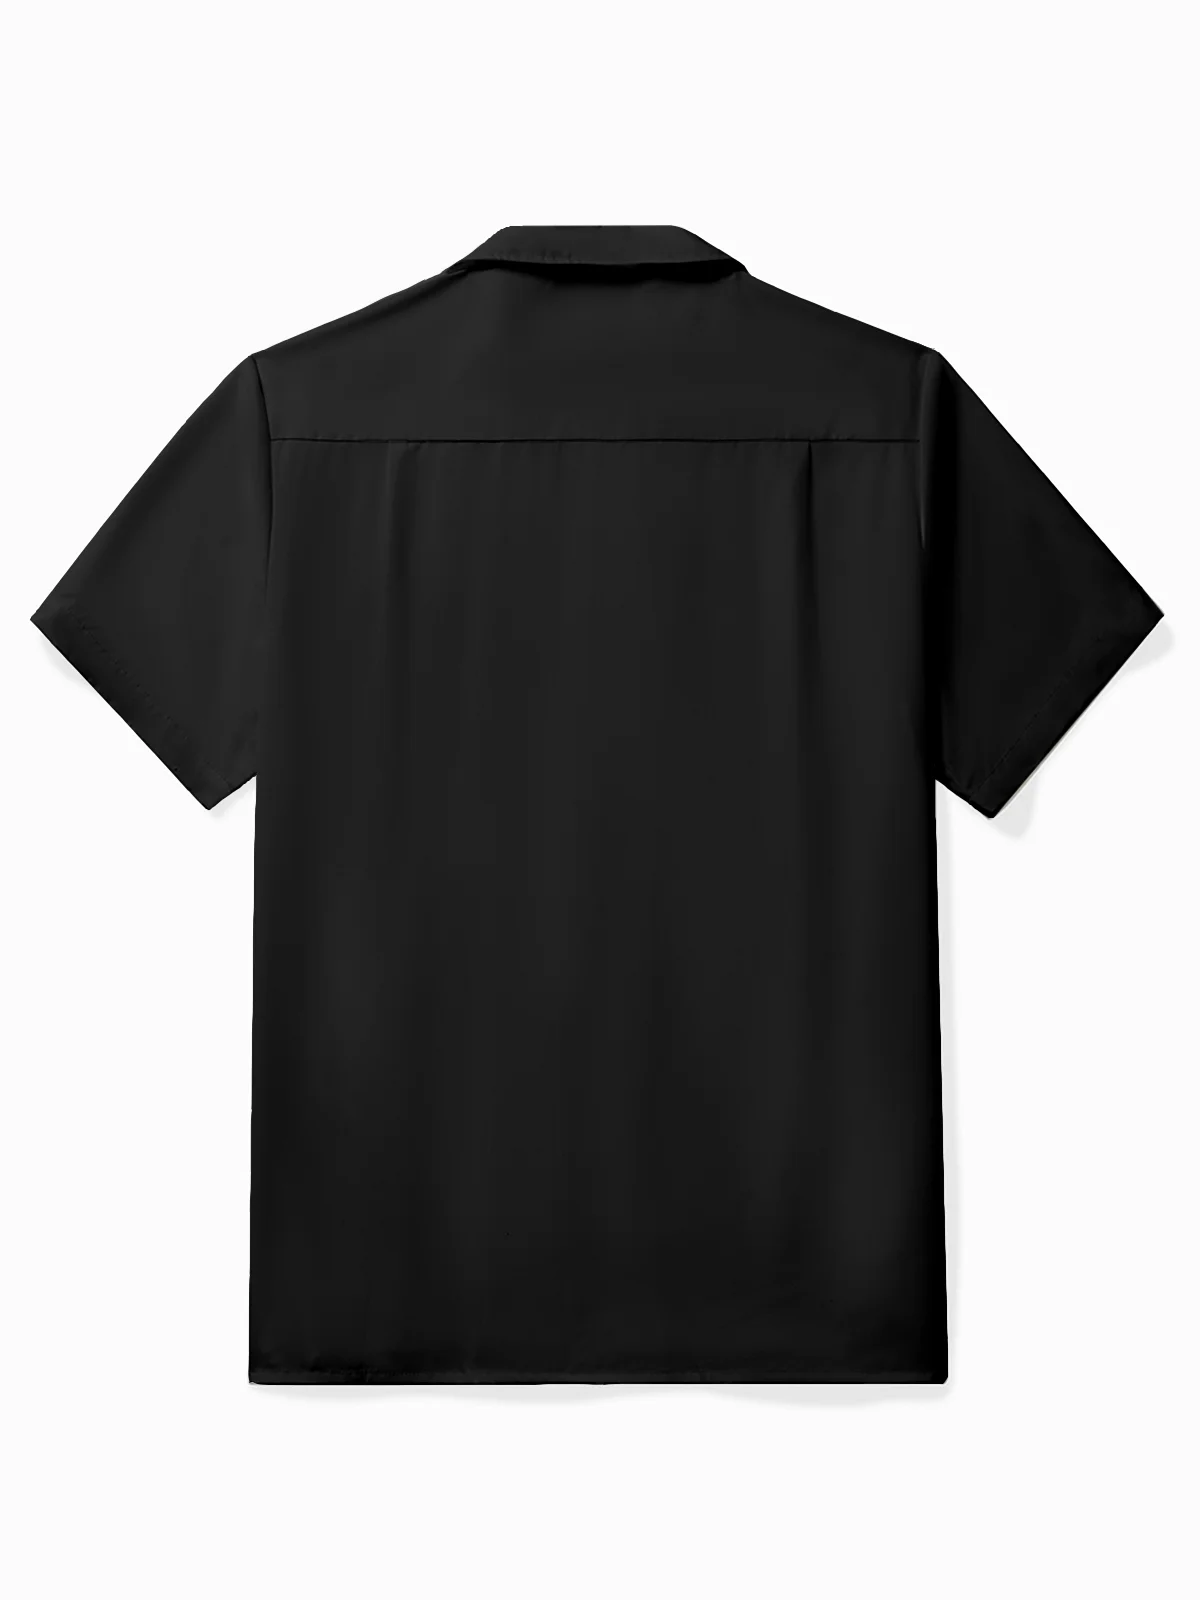 Royaura® Vintage Bowling Car Print Chest Pocket Shirt Plus Size Men's Shirt